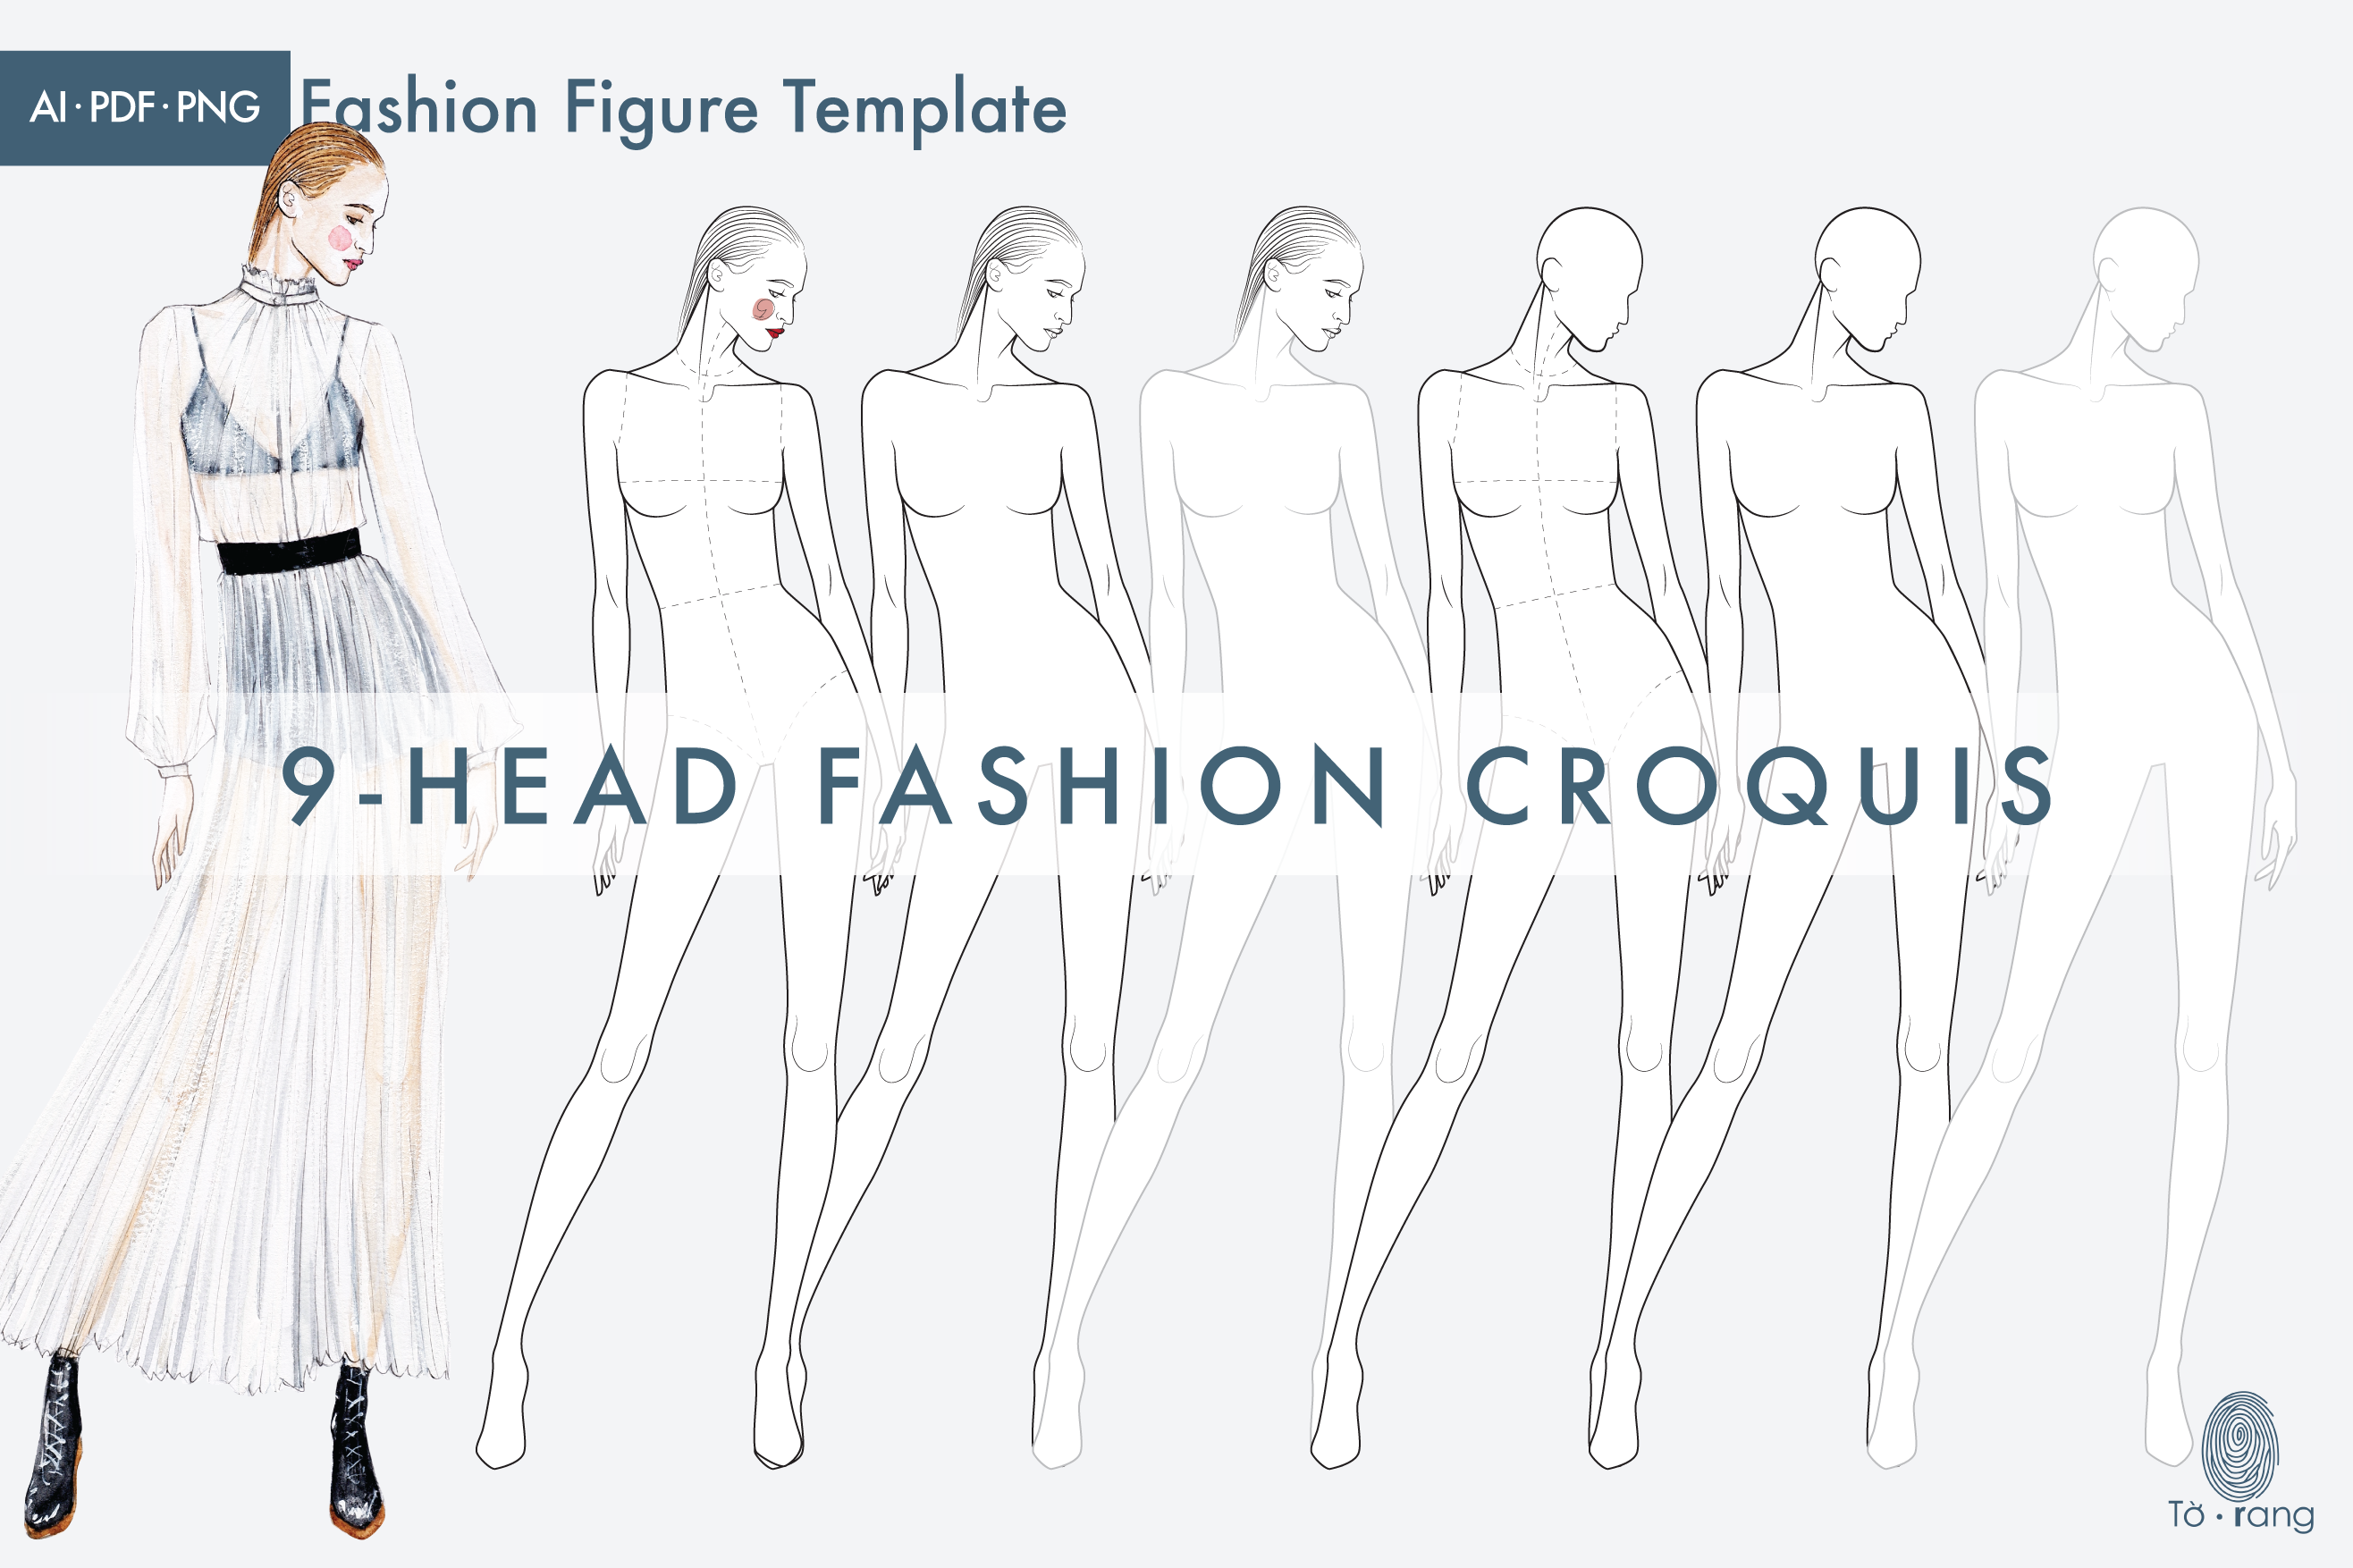 Make Your Own Fashion Figure Templates | Fashionista Sketch